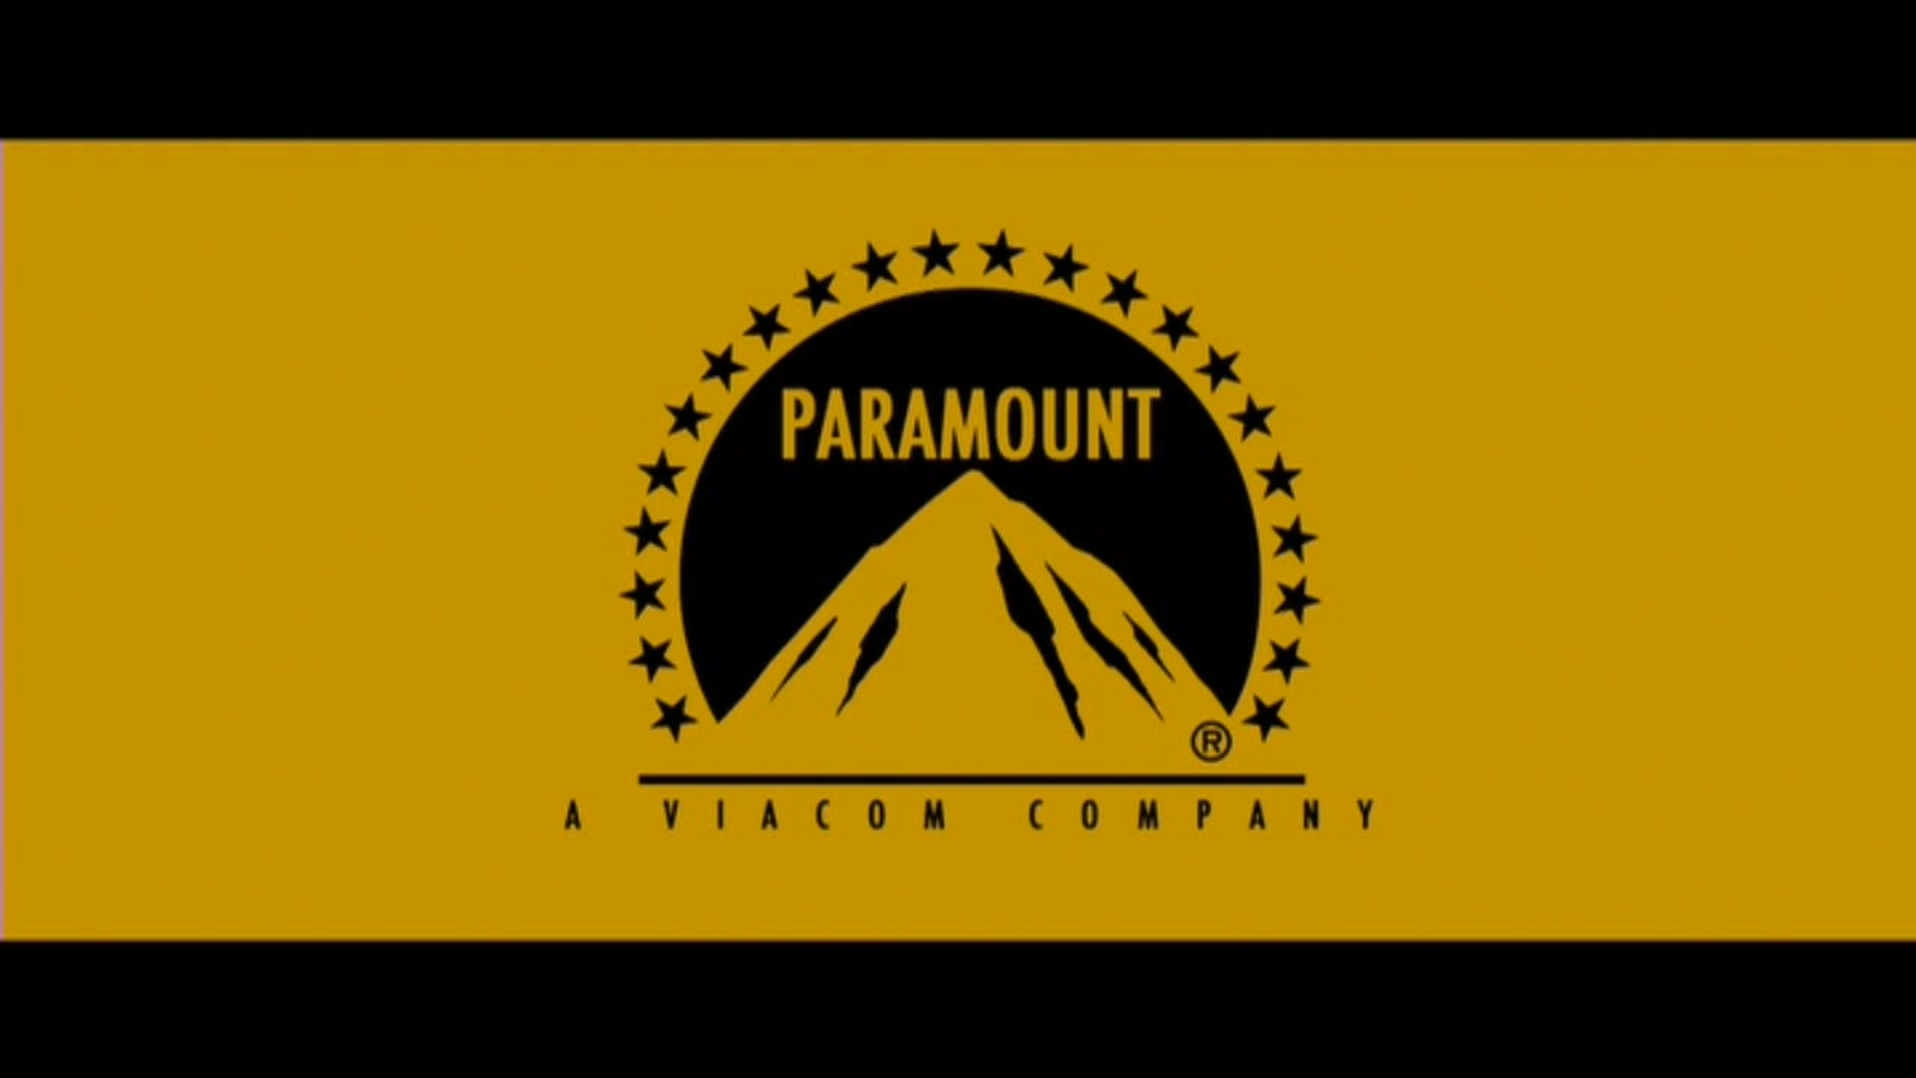 Paramount Pictures "Watchmen" (2009)